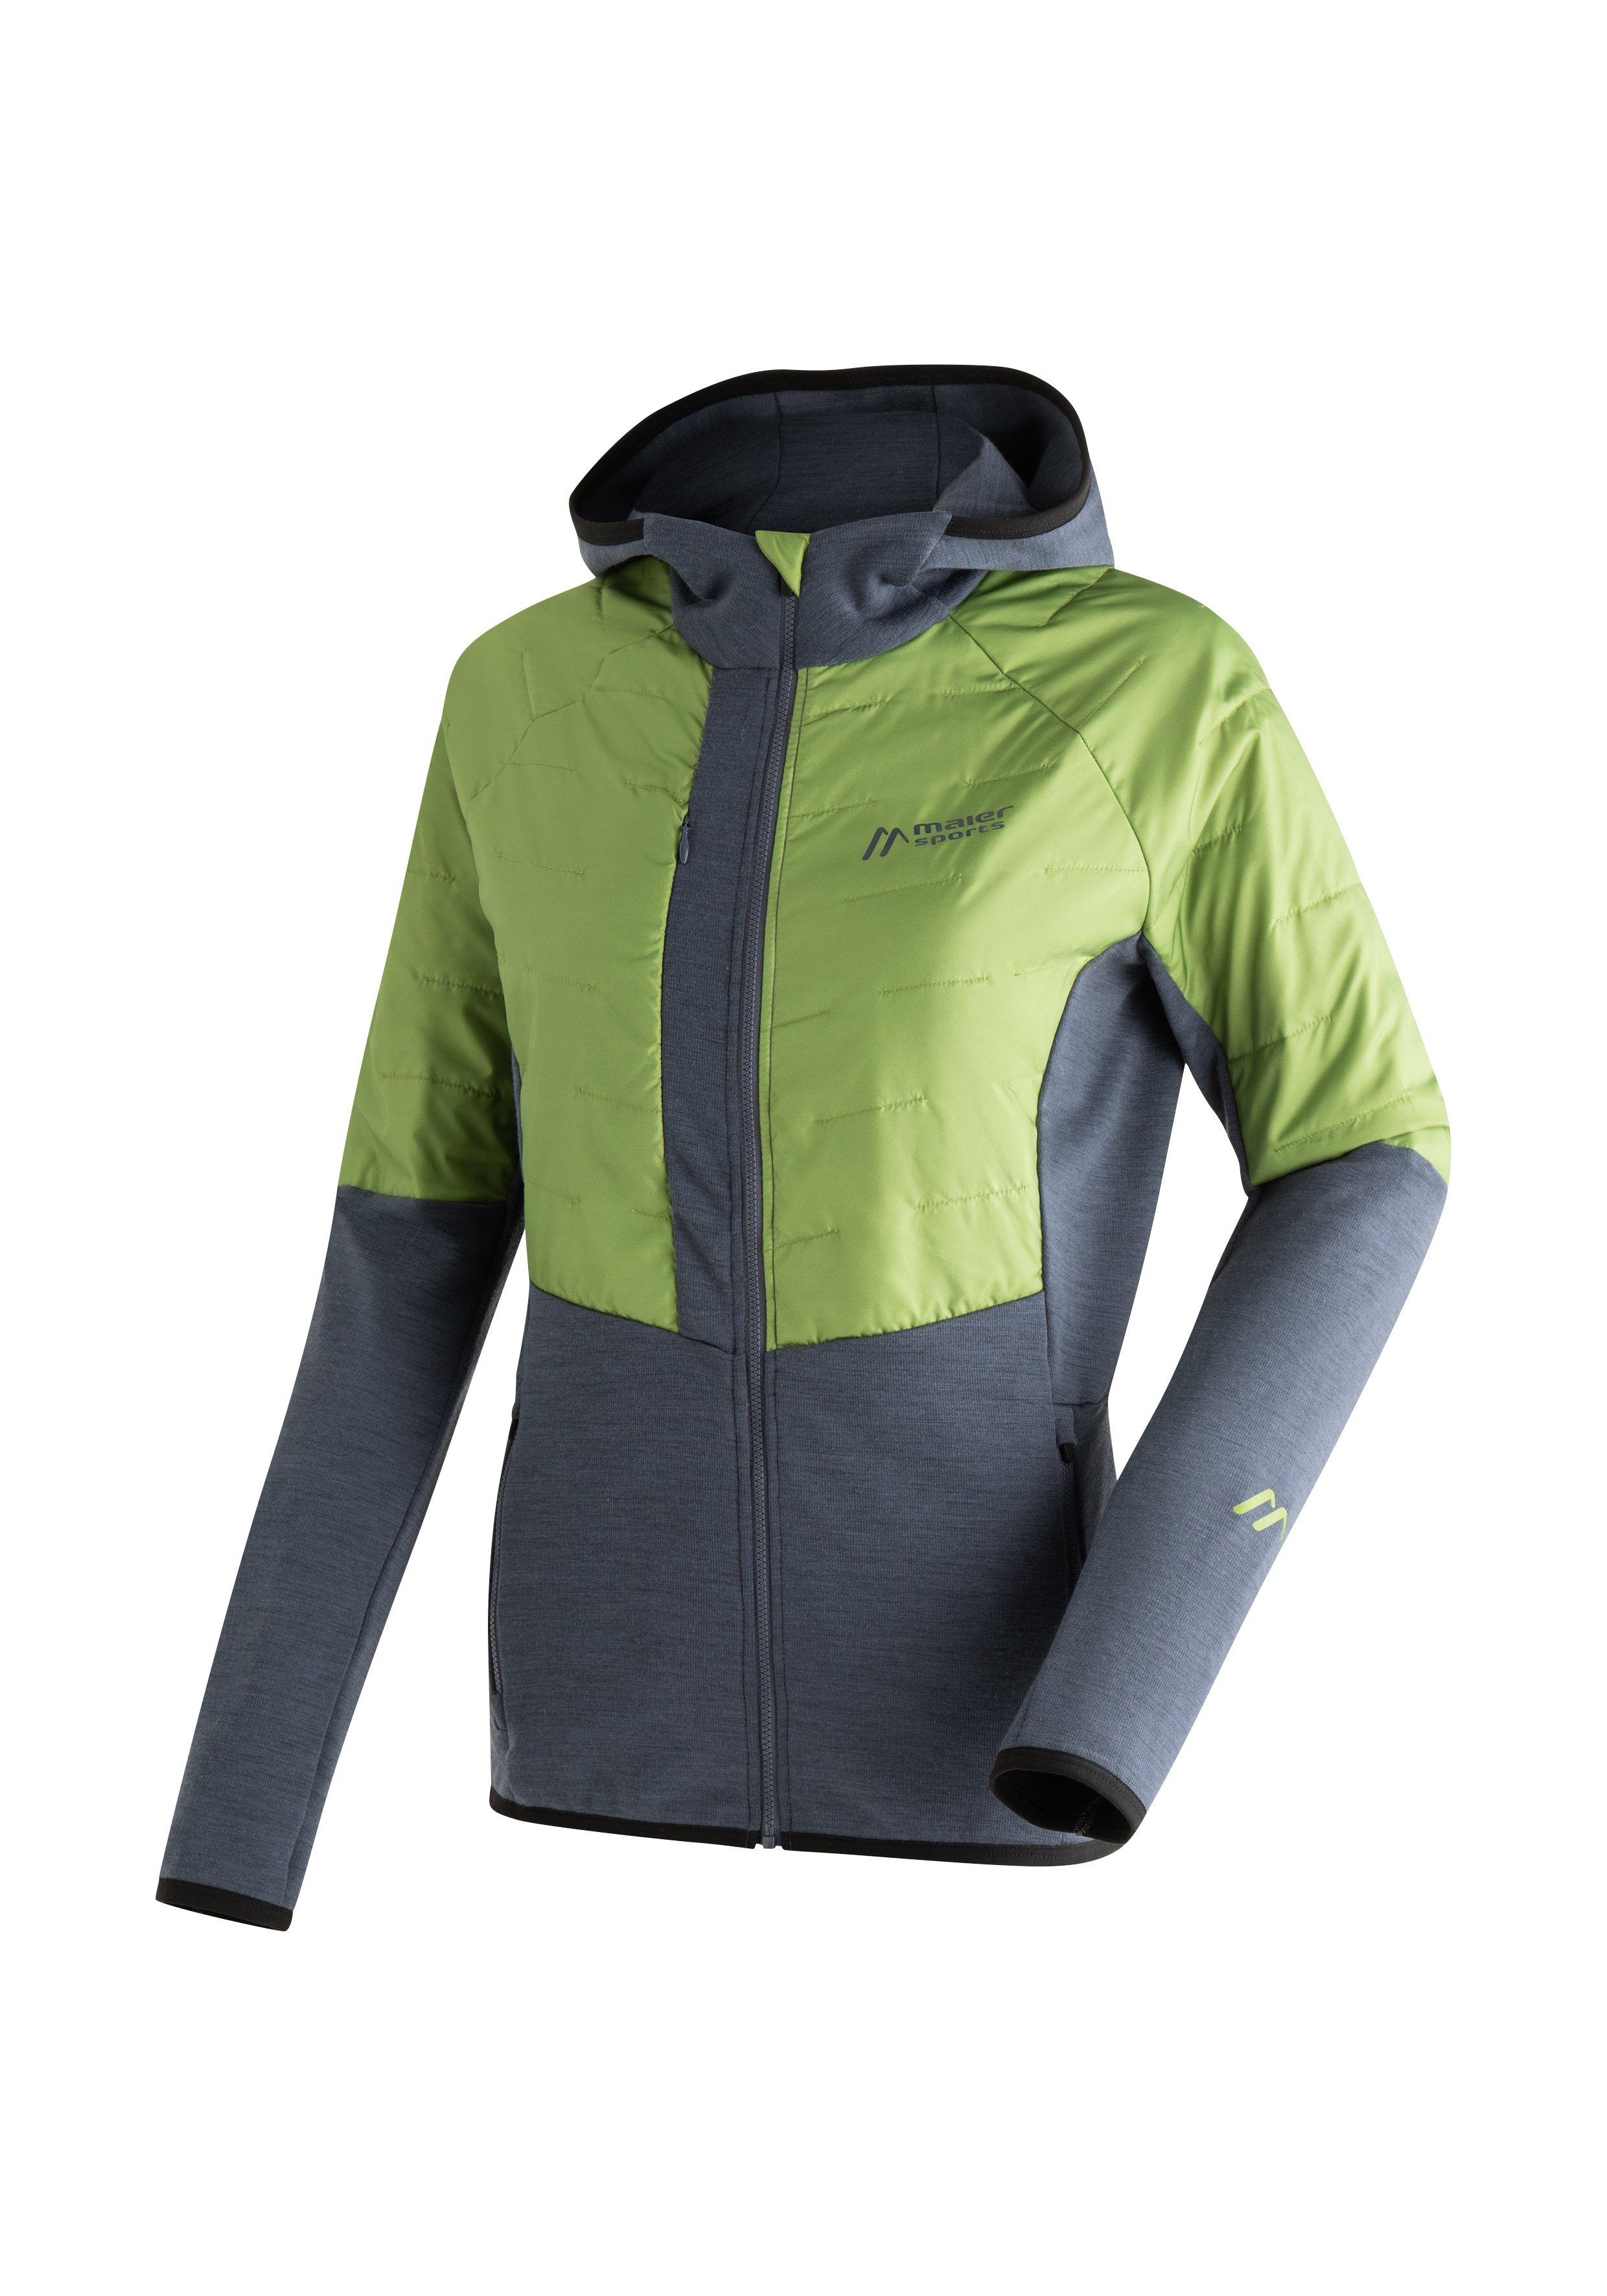 Maier Sports Outdoorjacke Lanus W Damen Wanderjacke wattiert, atmungsaktive Trekking-Jacke mit 3 Taschen grasgrün